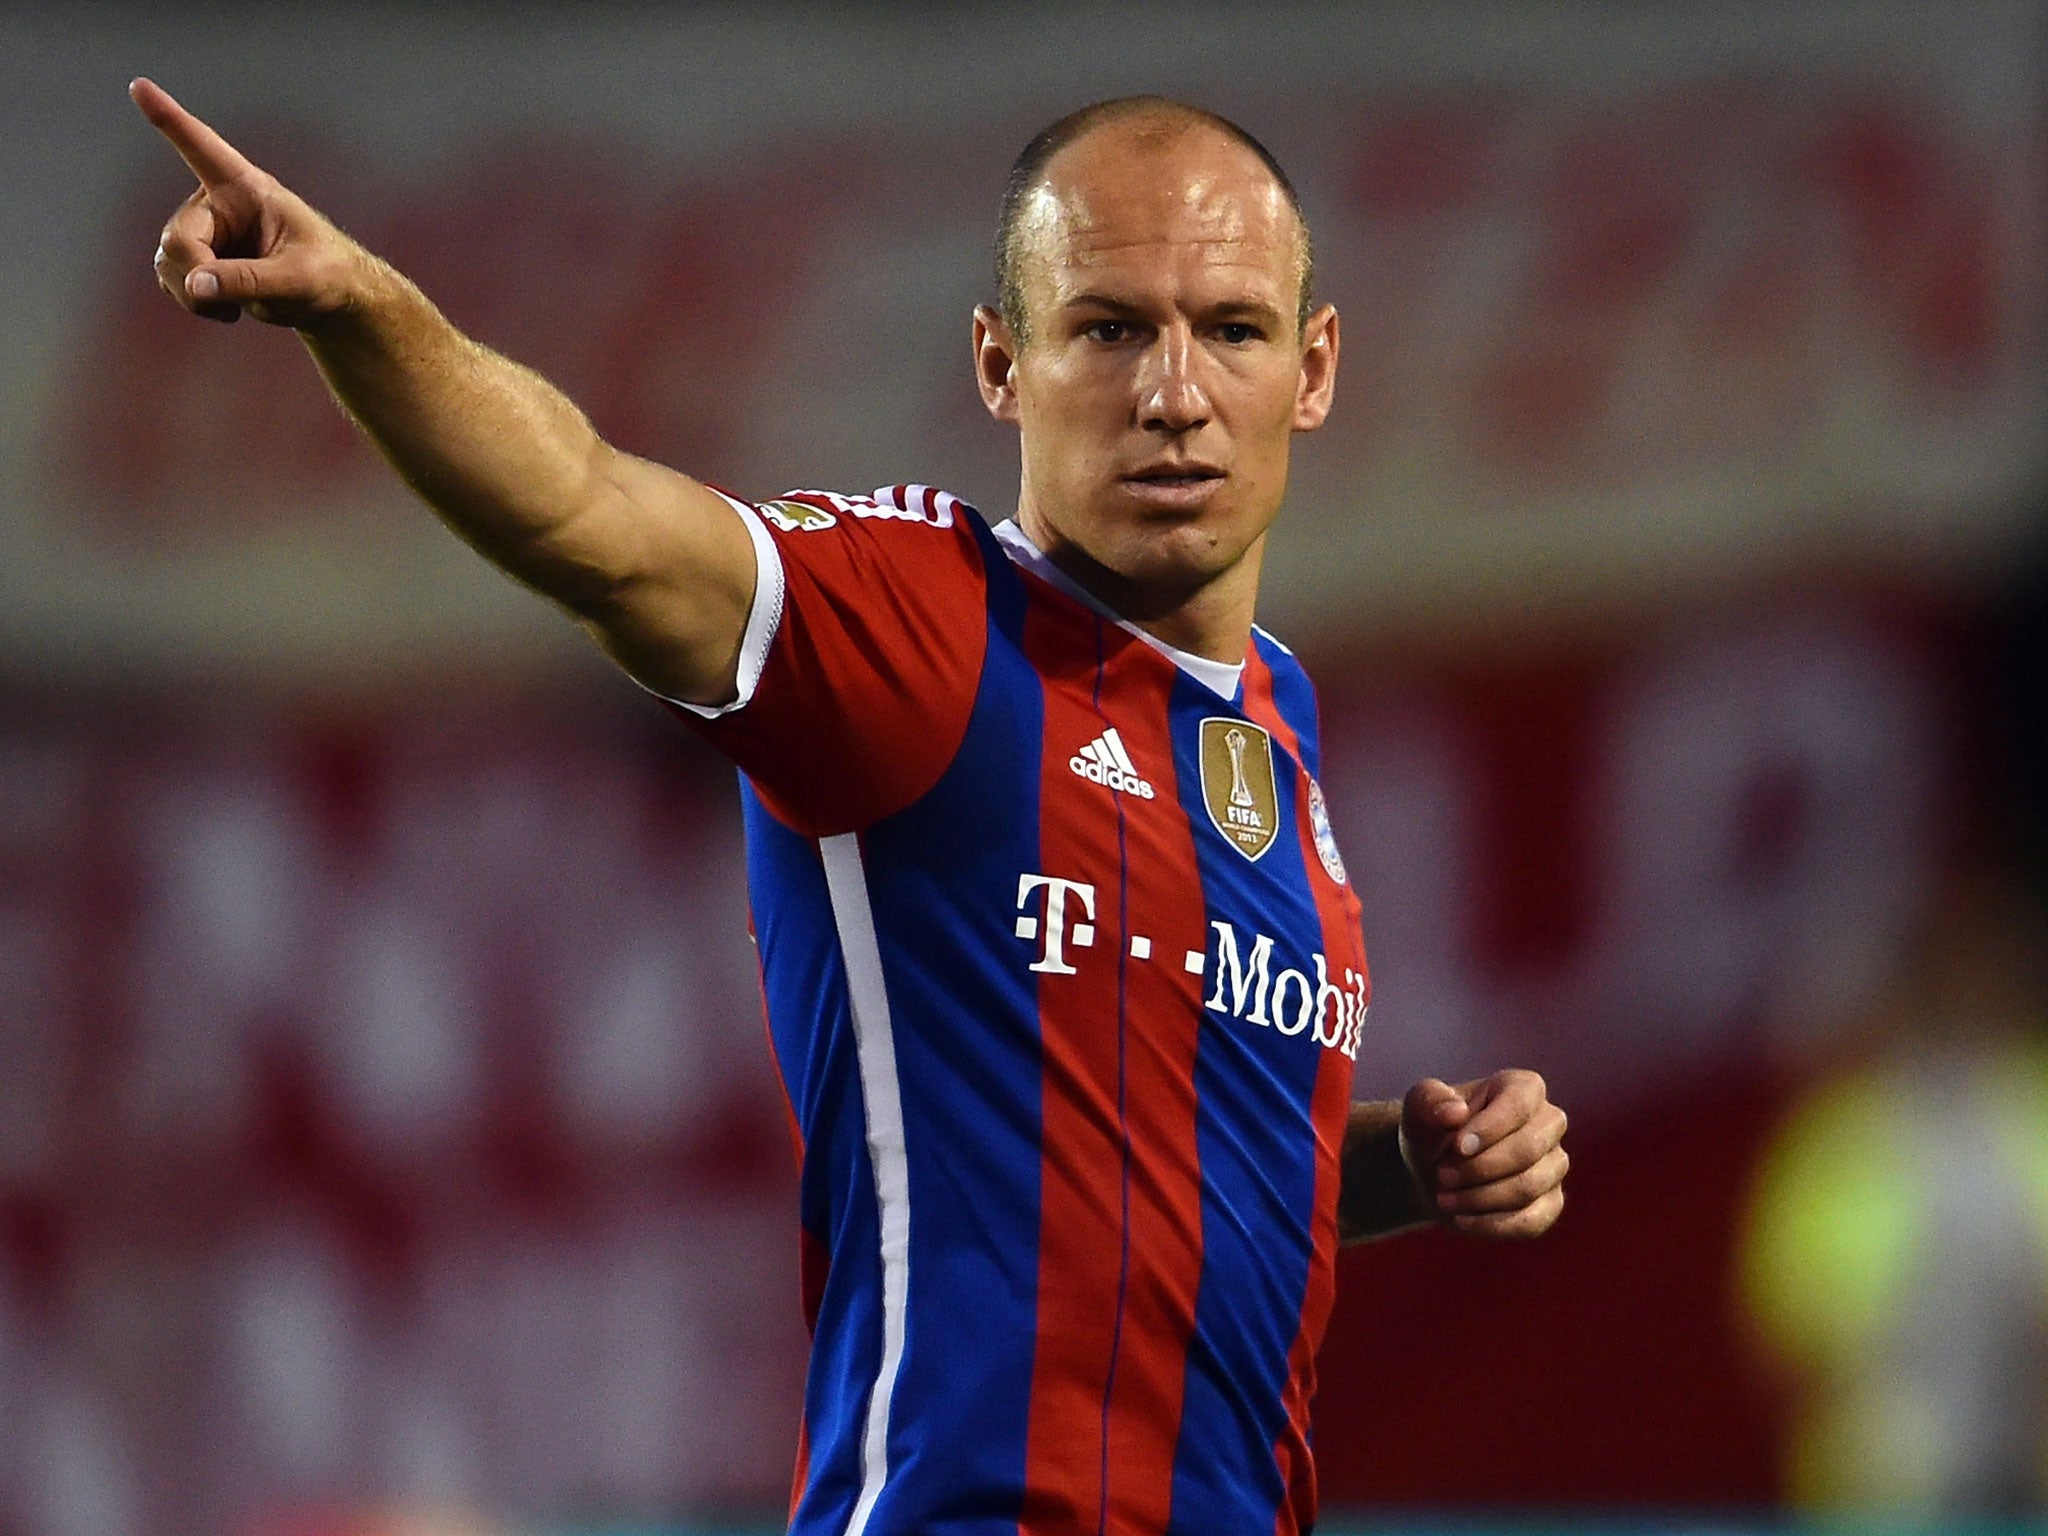 Arjen Robben in action for Bayern Munich